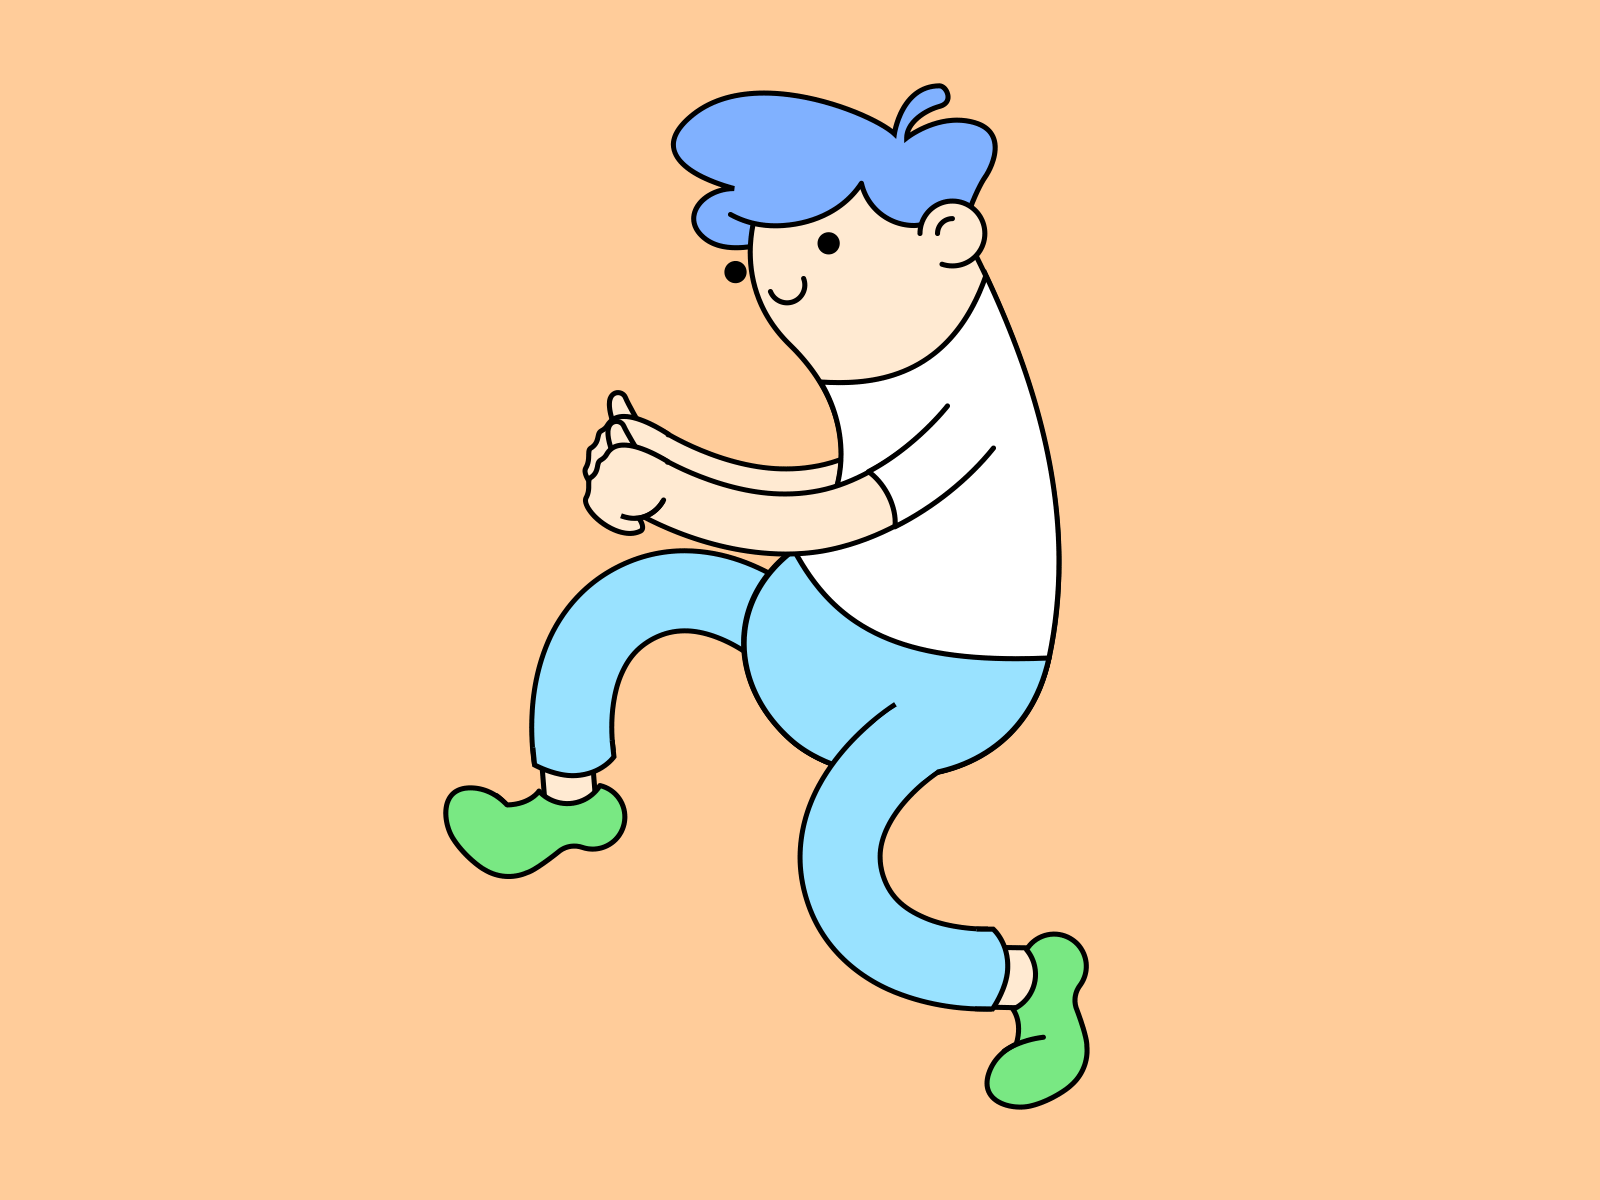 running man dance style